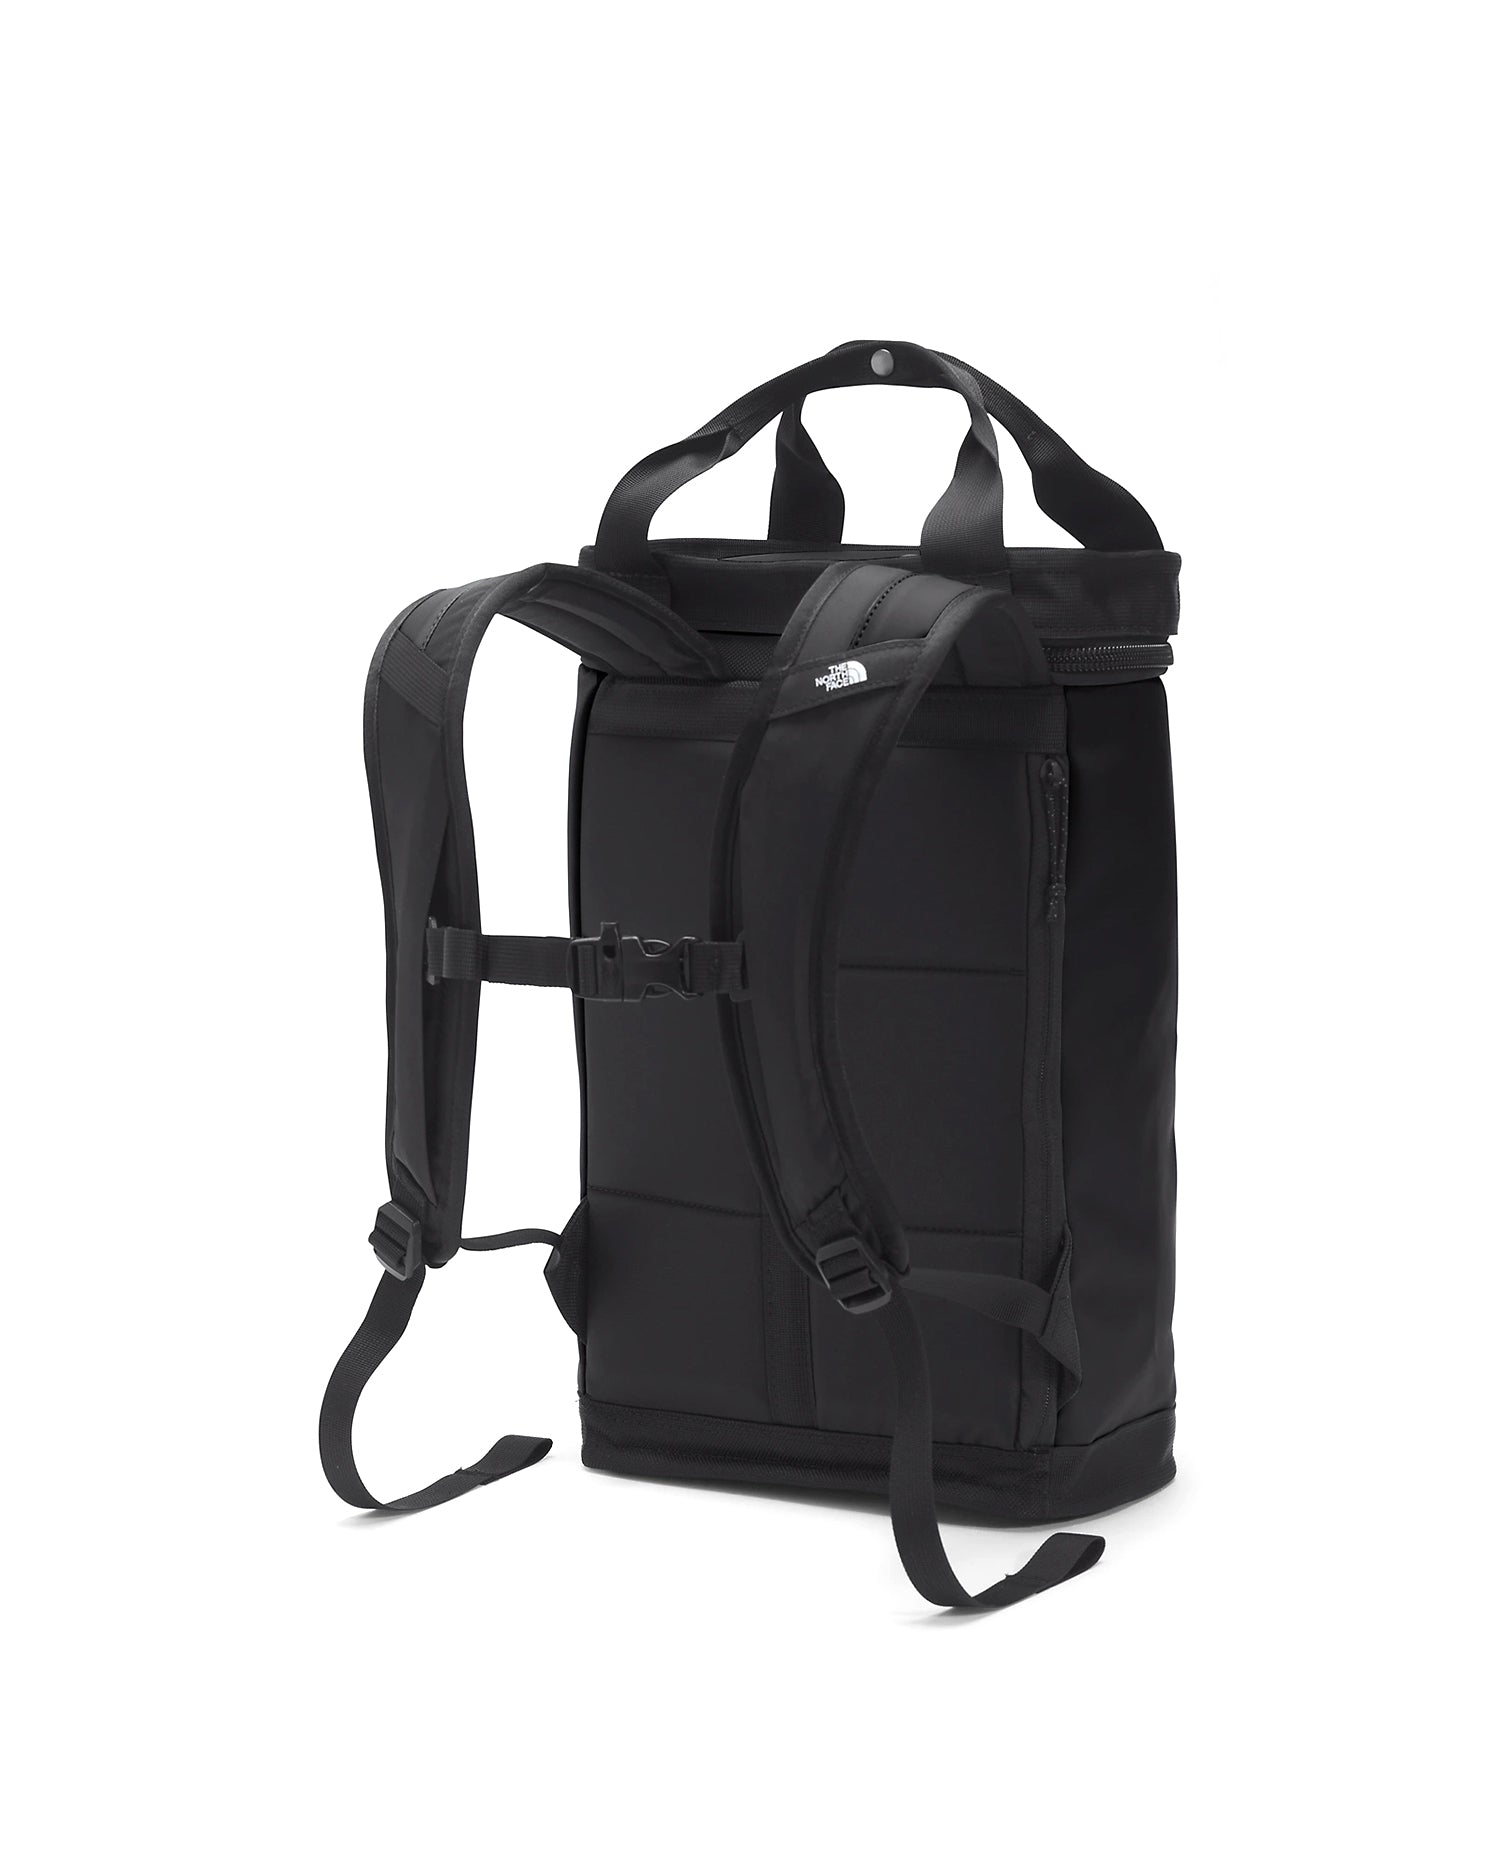 Explore Fusebox Backpack - Black / White